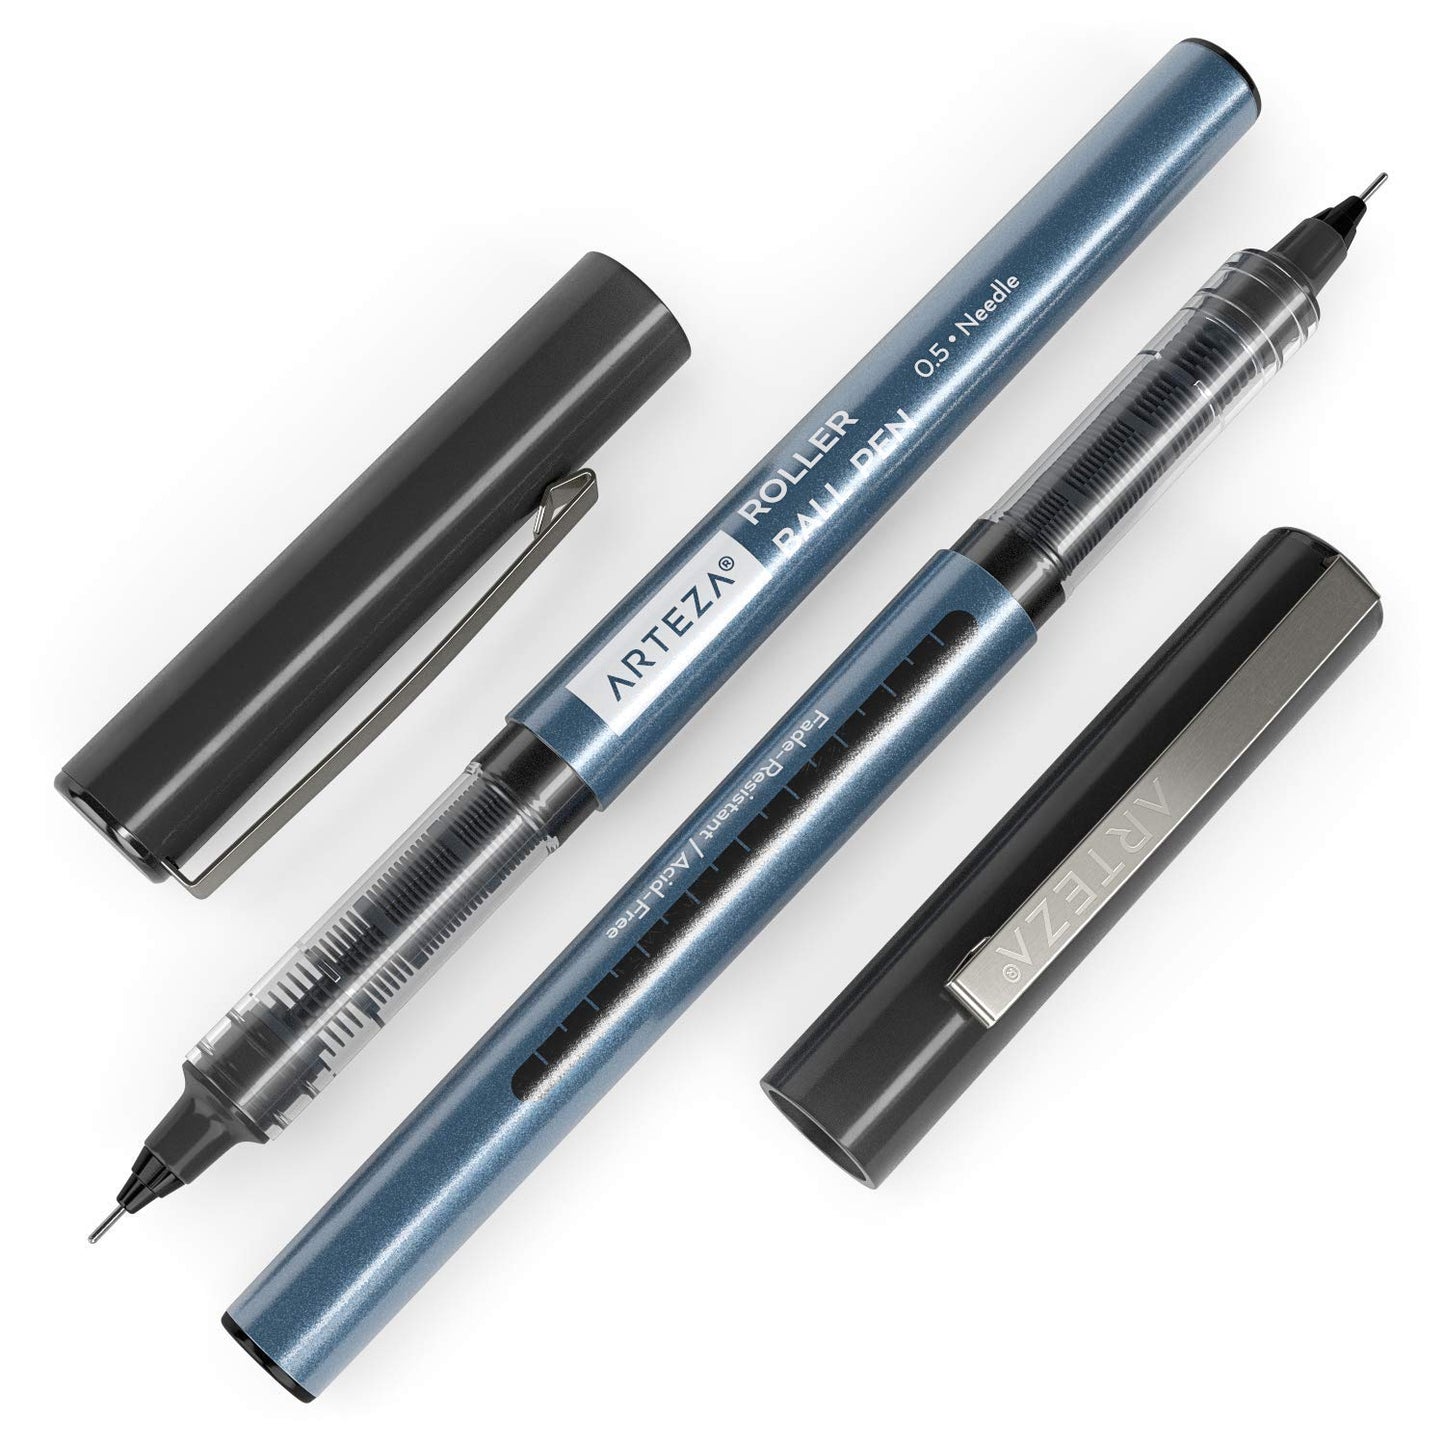 Arteza Roller Ball Pens, Black, 0.5mm Nib - 20 Pack